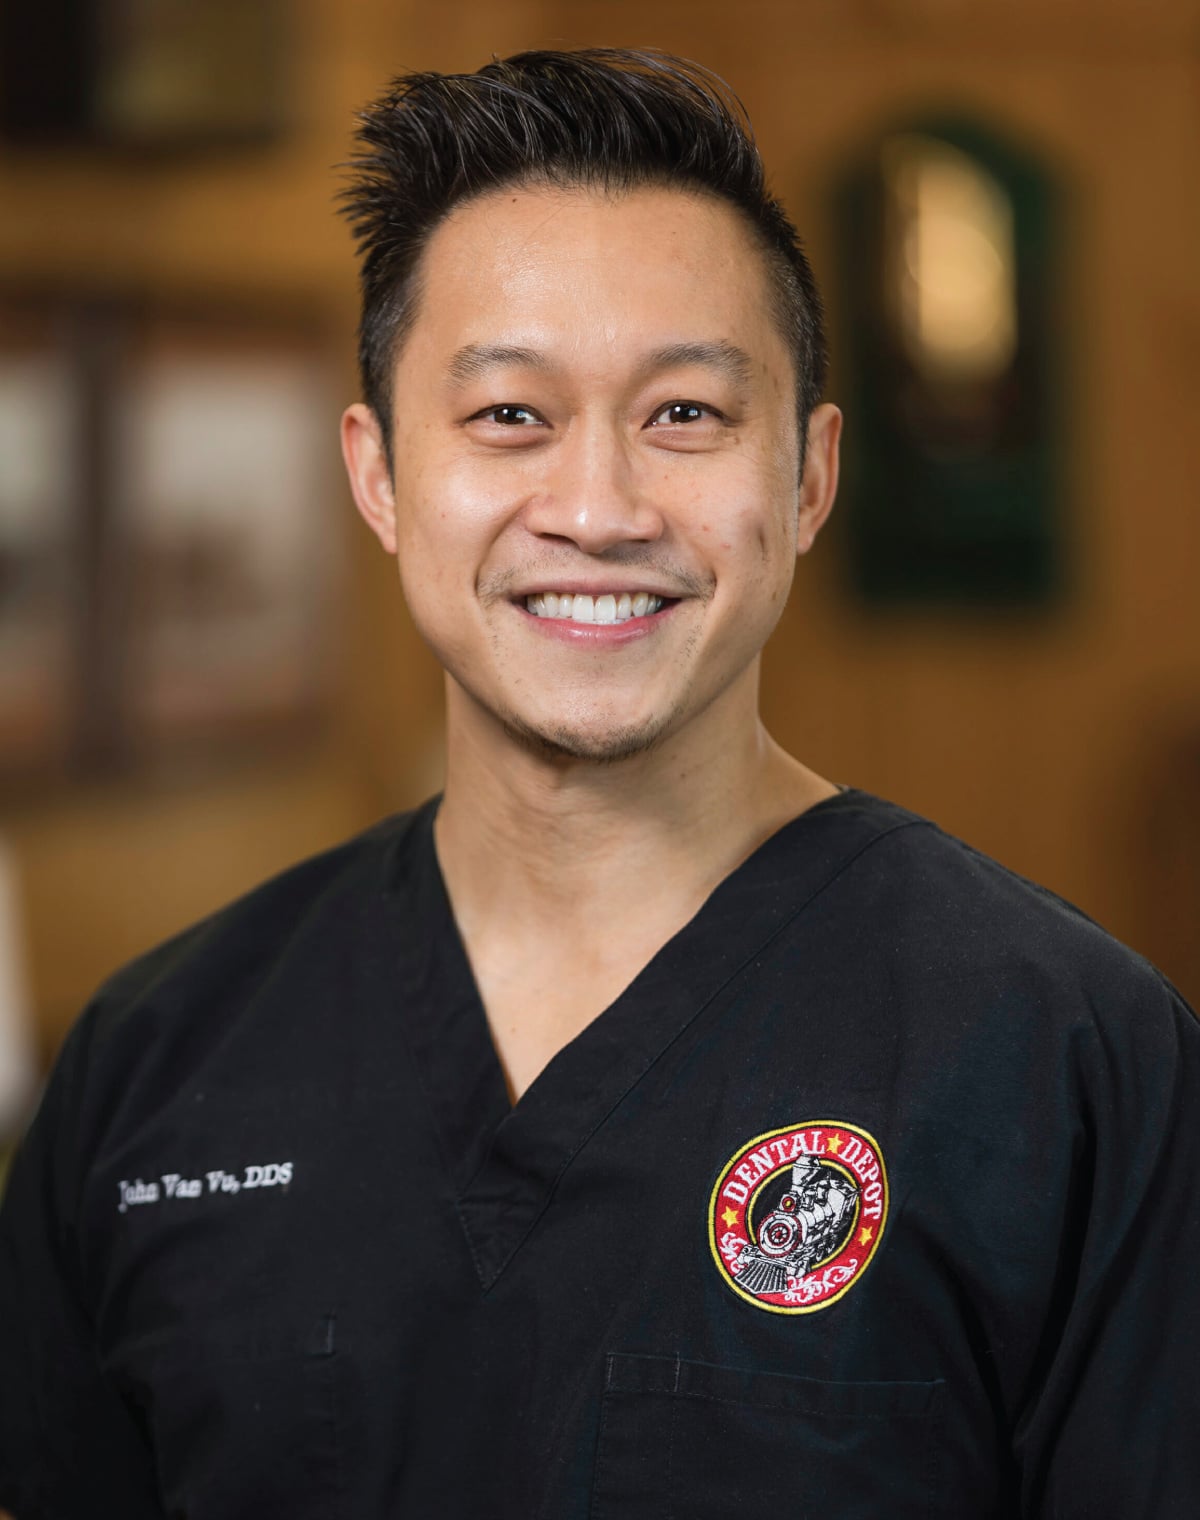 Dr. John Van Vu of dental depot north OKC